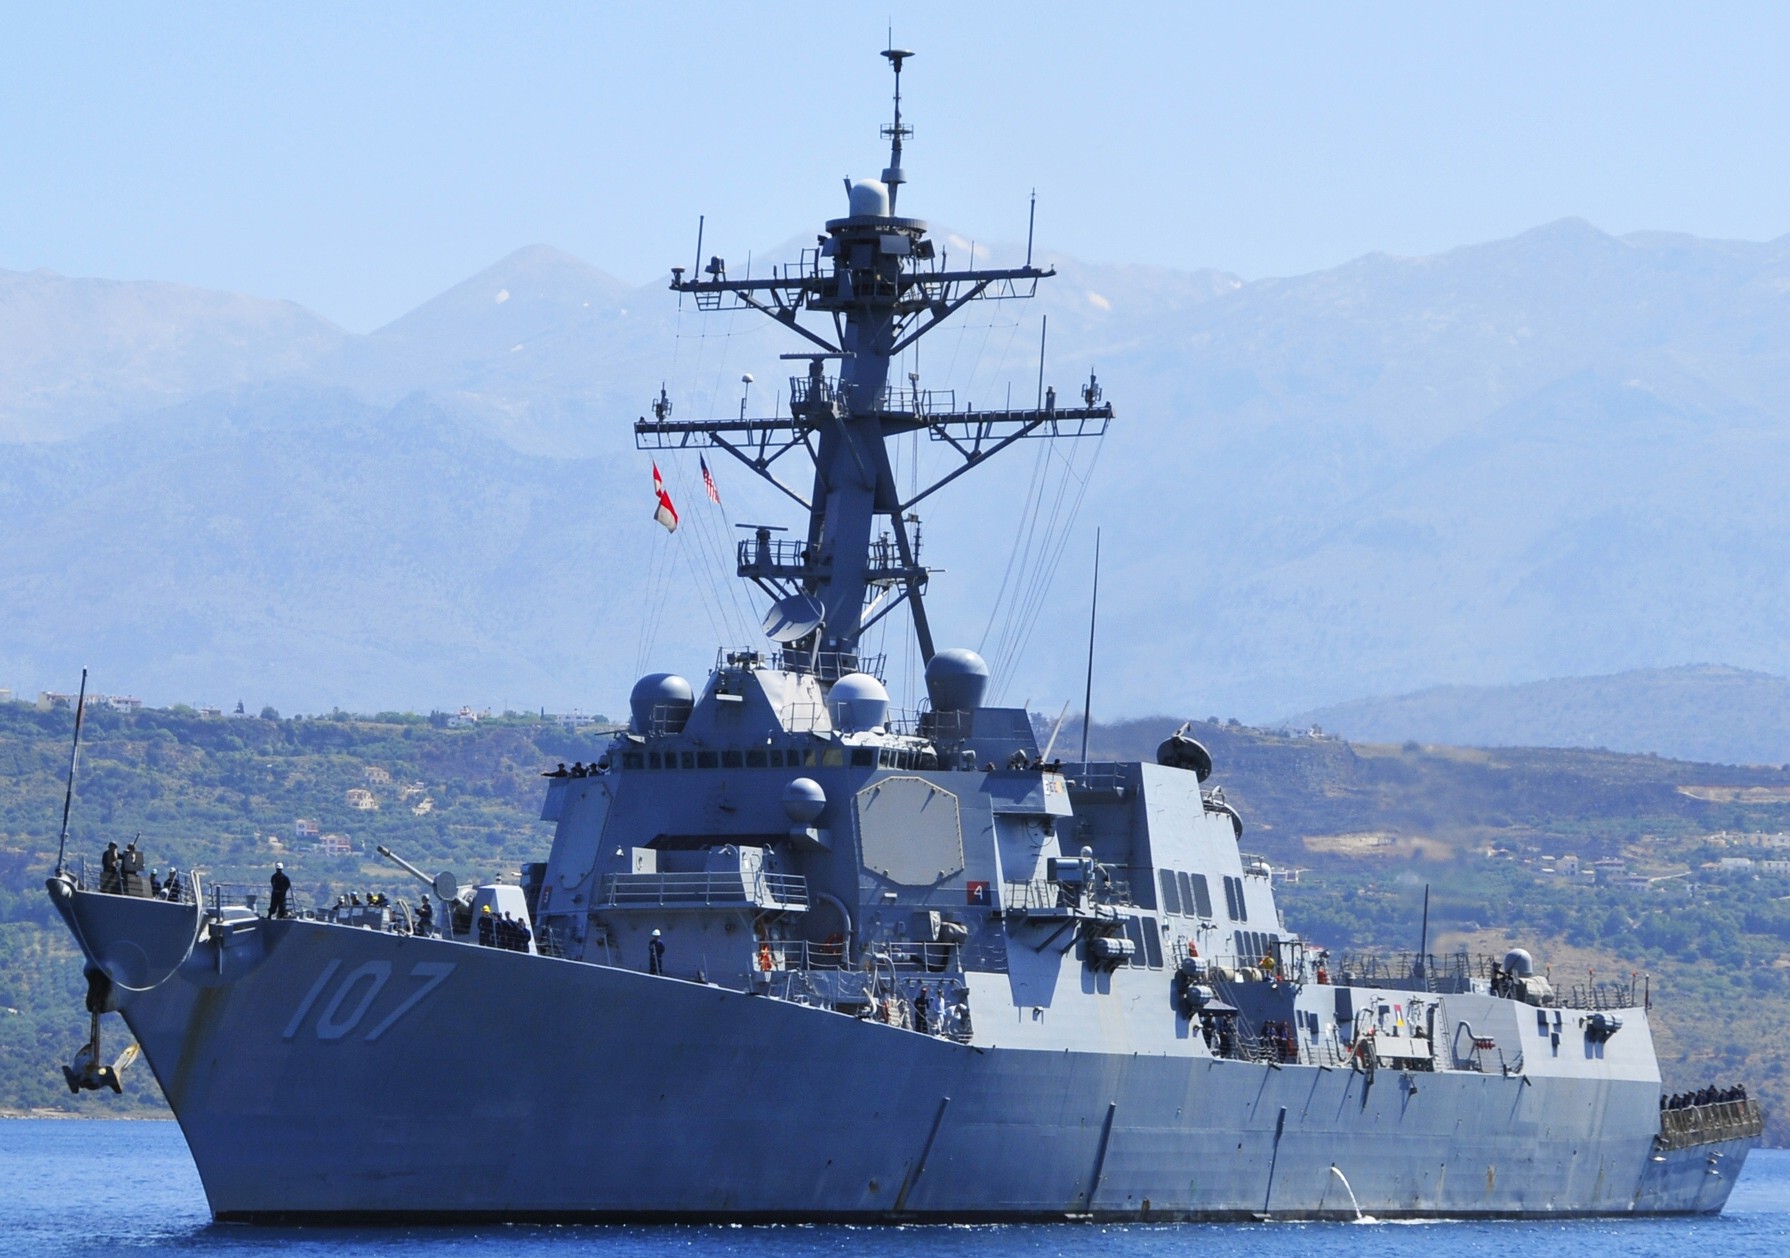 ddg-107 uss gravely arleigh burke class guided missile destroyer aegis us navy souda bay crete greece 10